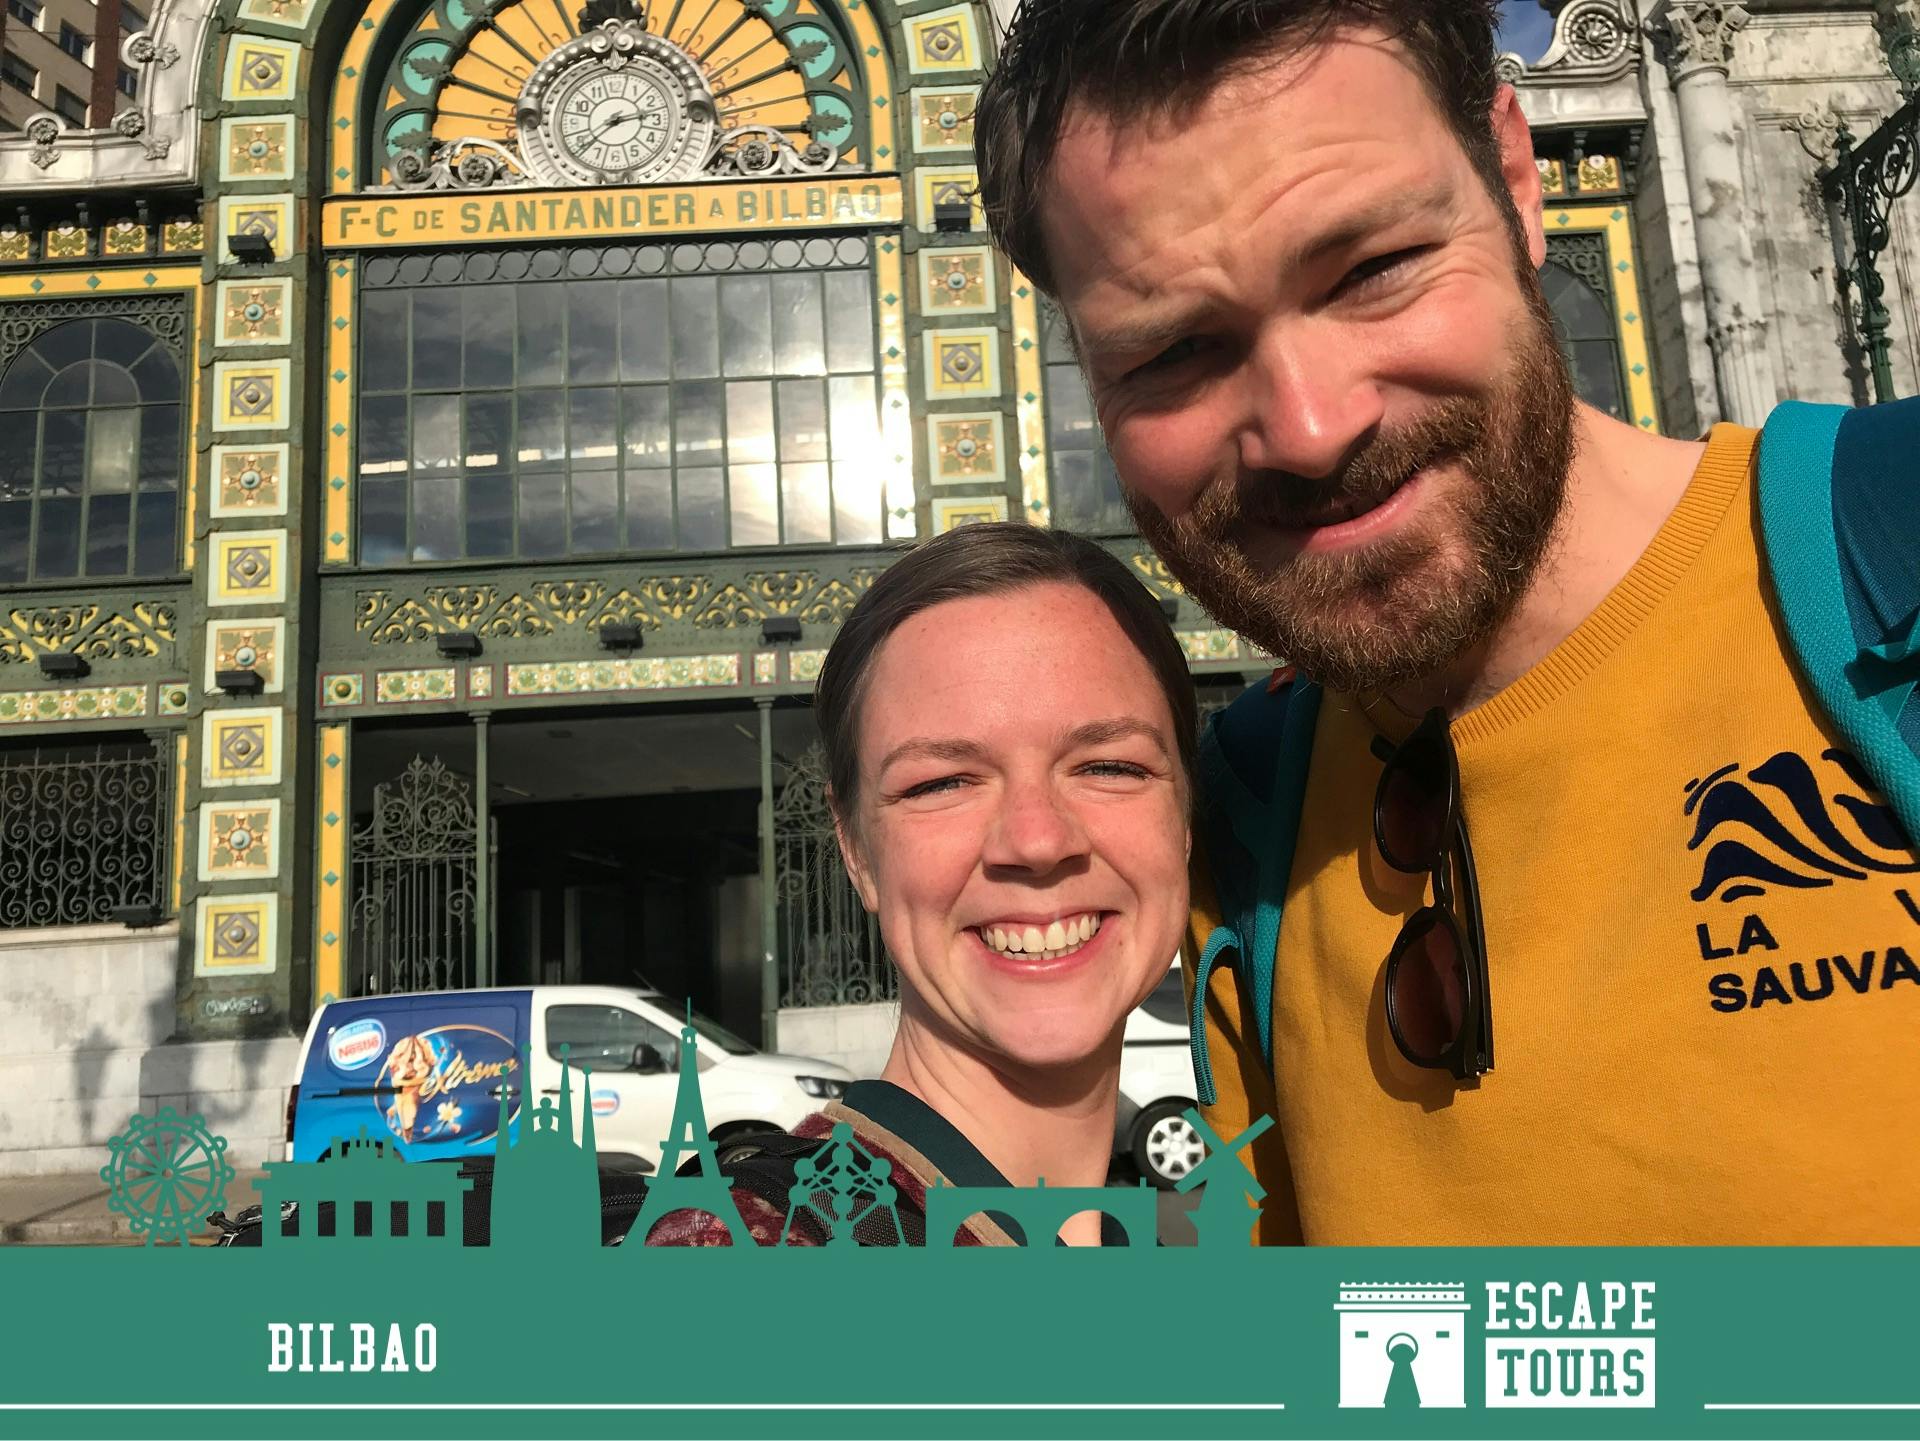 Escape Tour self-guided, interactive city challenge in Bilbao